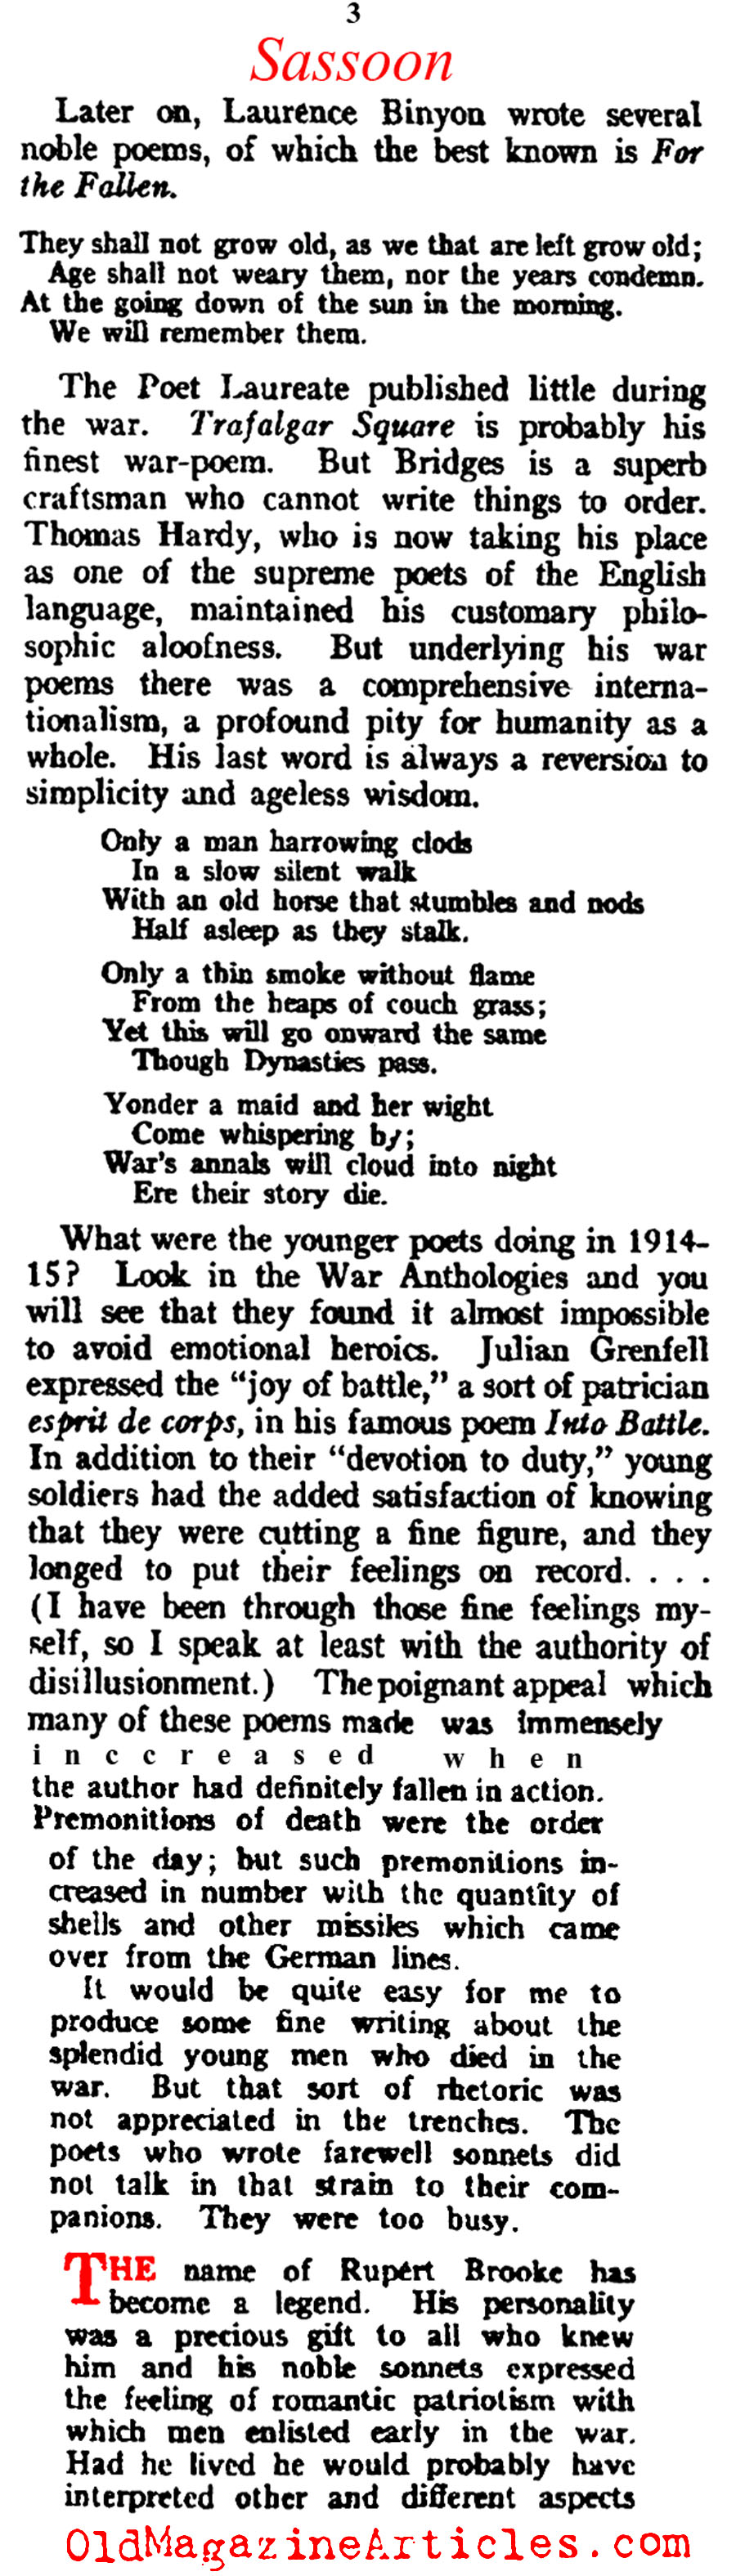 Siegfried Sassoon on the Soldier Poets  (Vanity Fair, 1920)